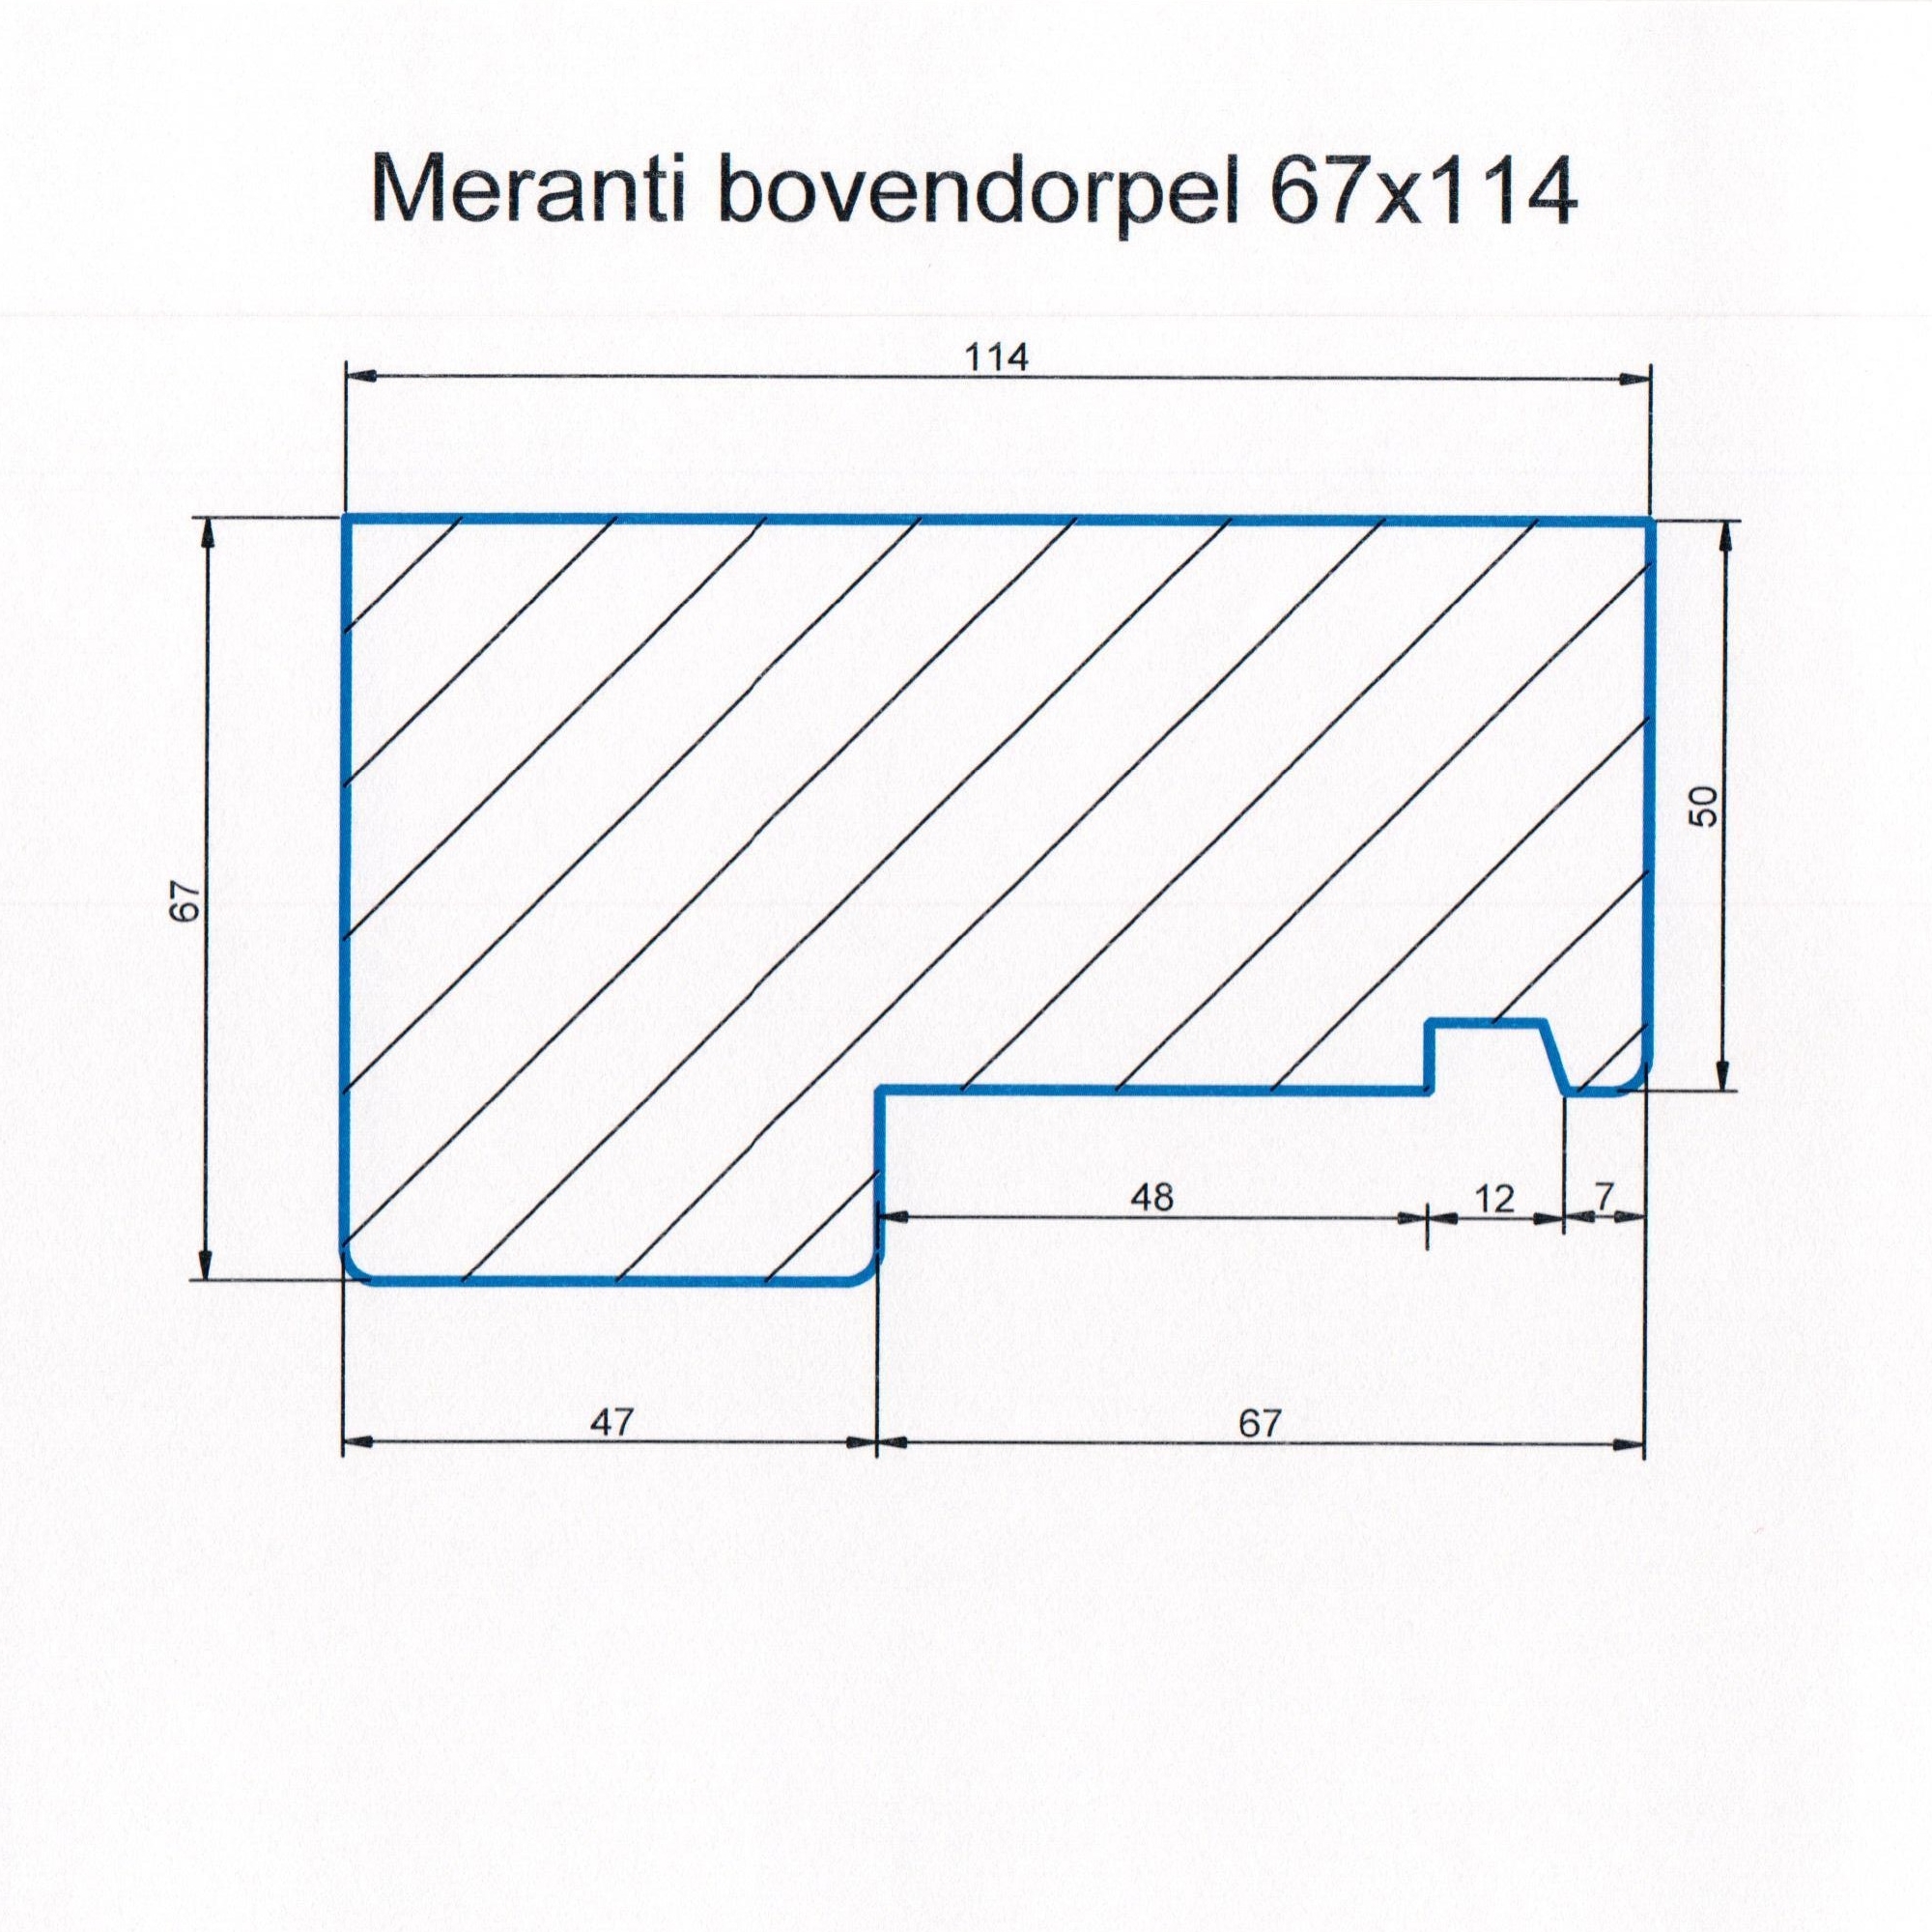 Meranti 67x114 kozijnhout bovendorpel L=2450 mm